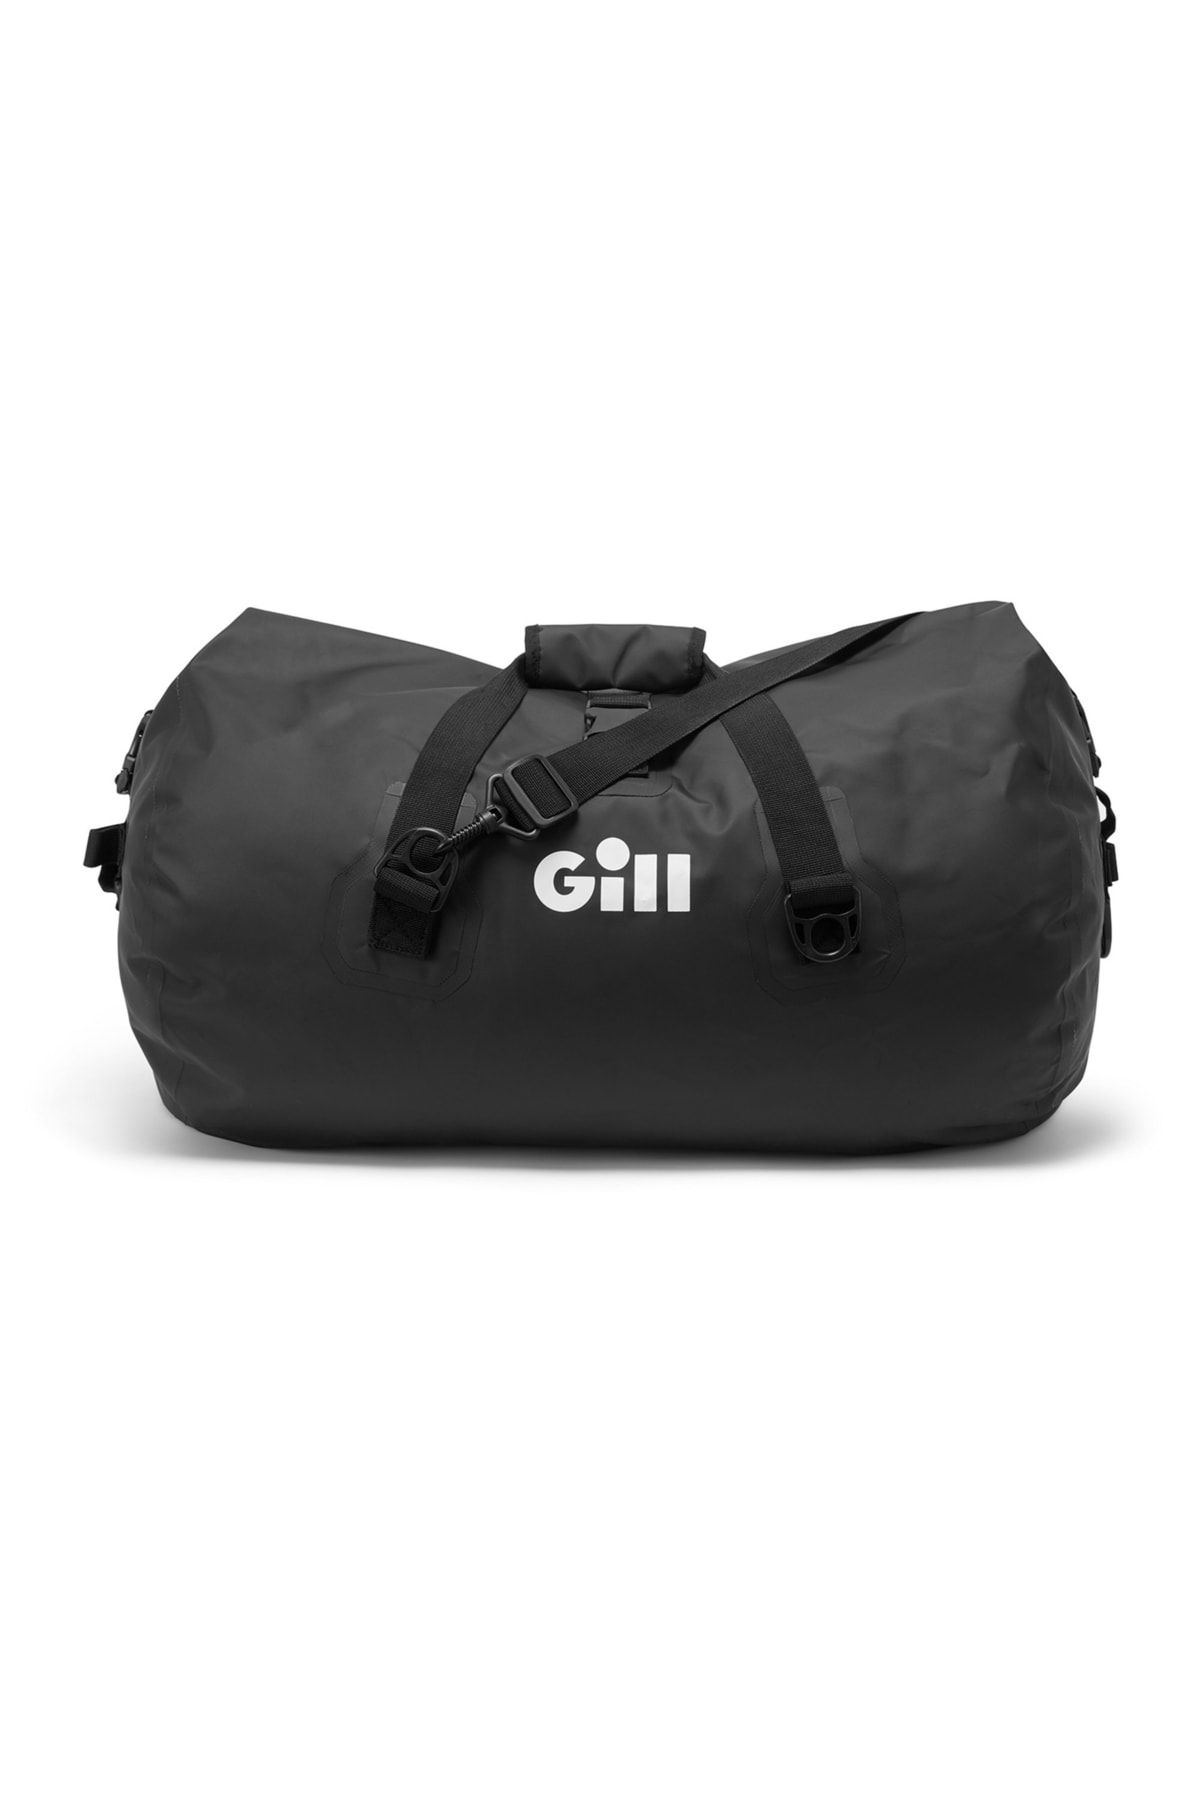 Gill Voyager Duffel Bag 60l